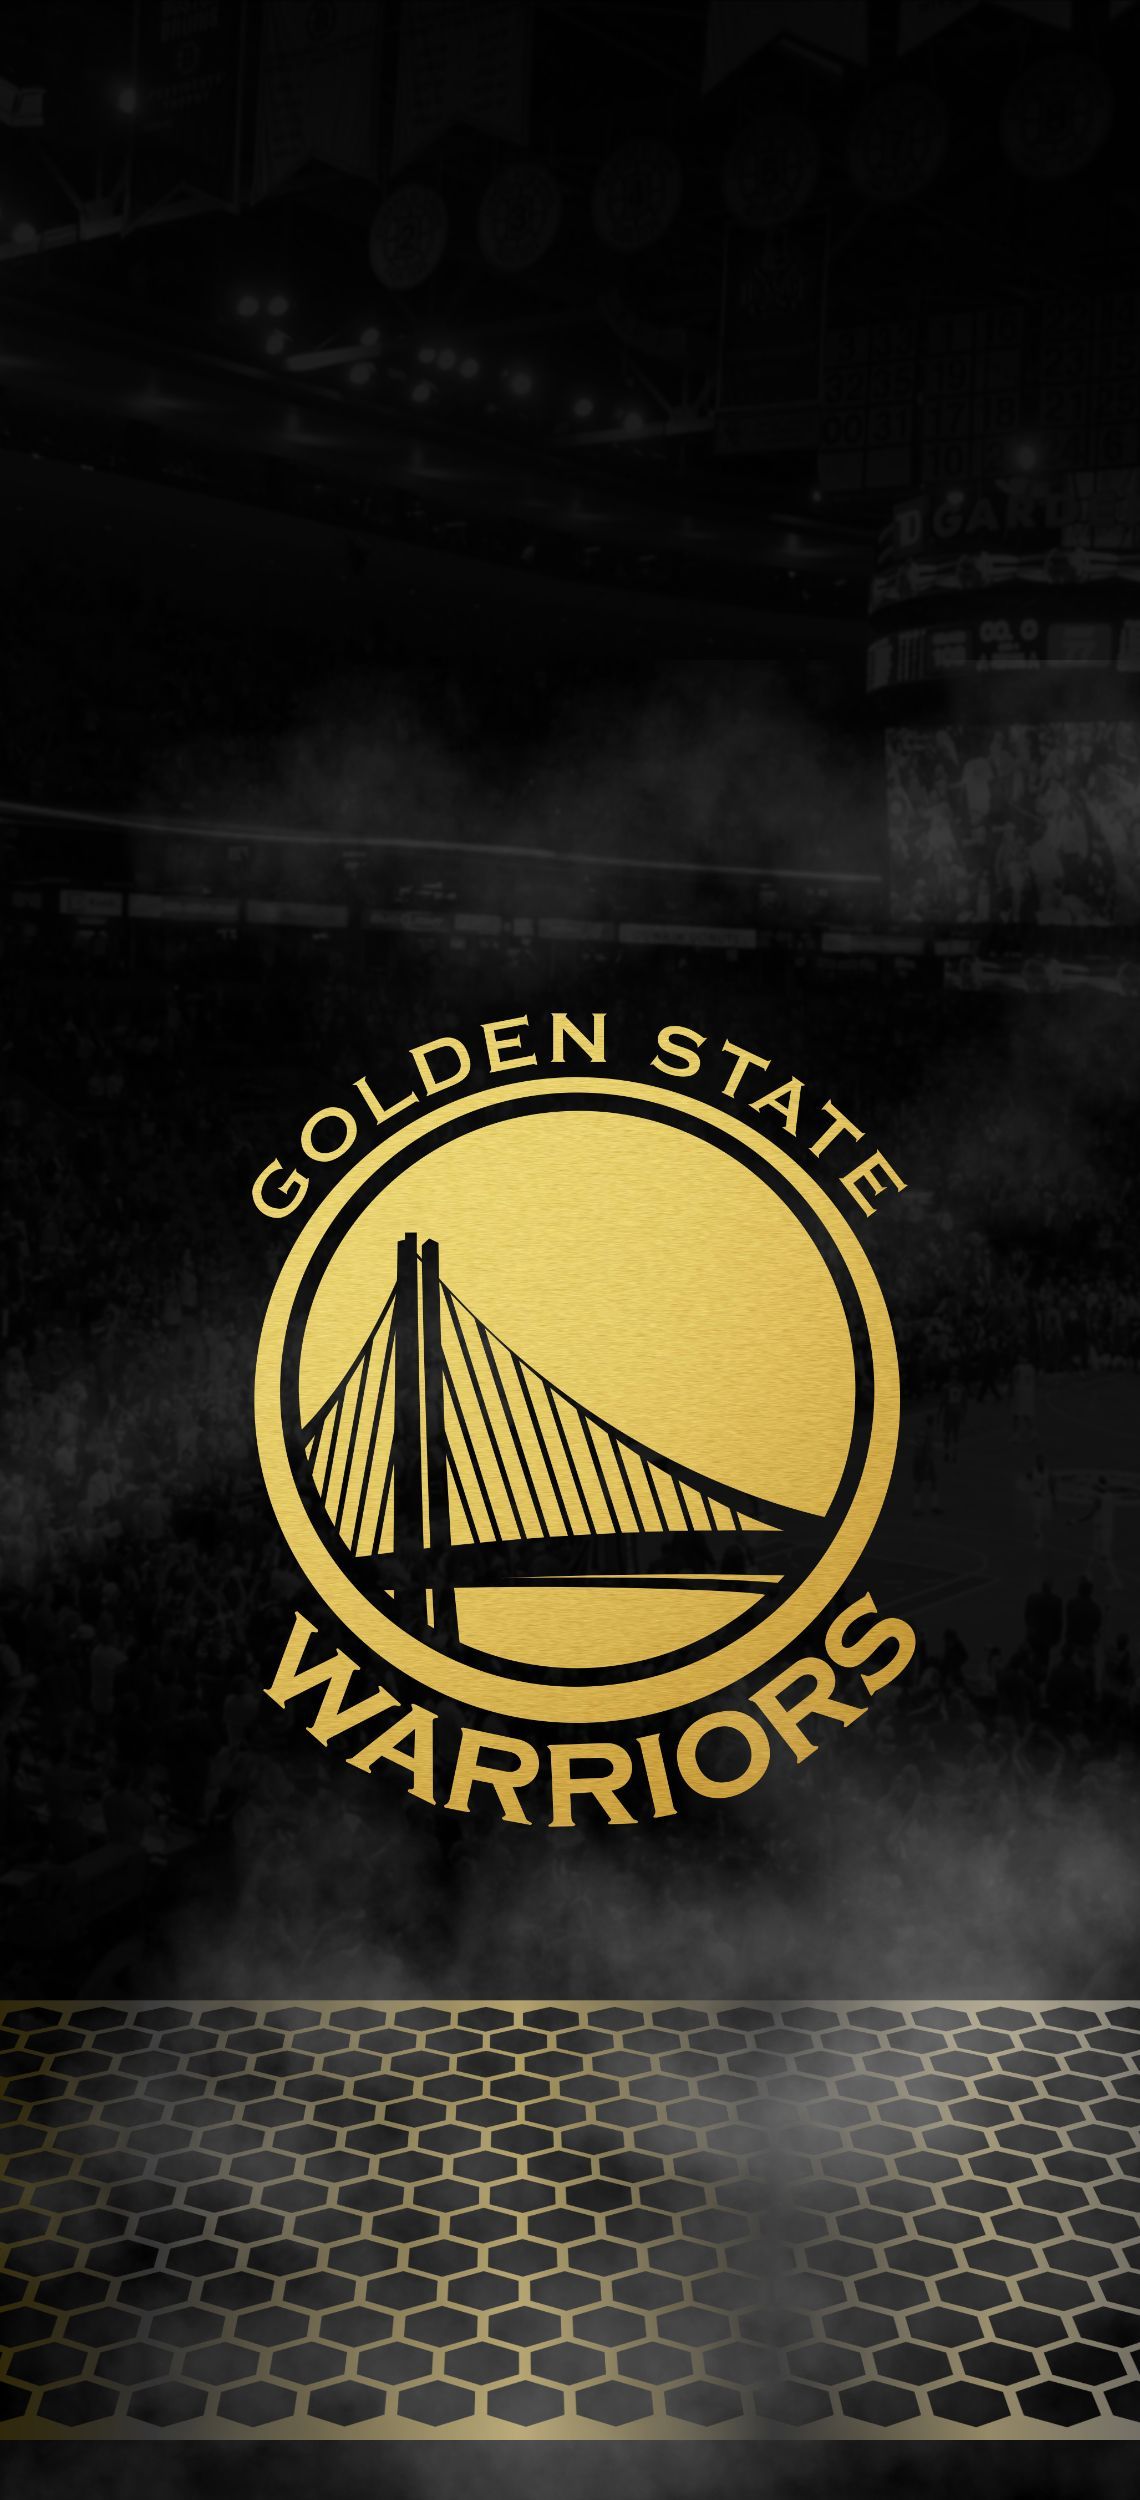 Golden State Warriors Wallpaper Discover more American, Basketball, Golden State Warri. Golden state warriors wallpaper, Warriors wallpaper, Golden state warriors